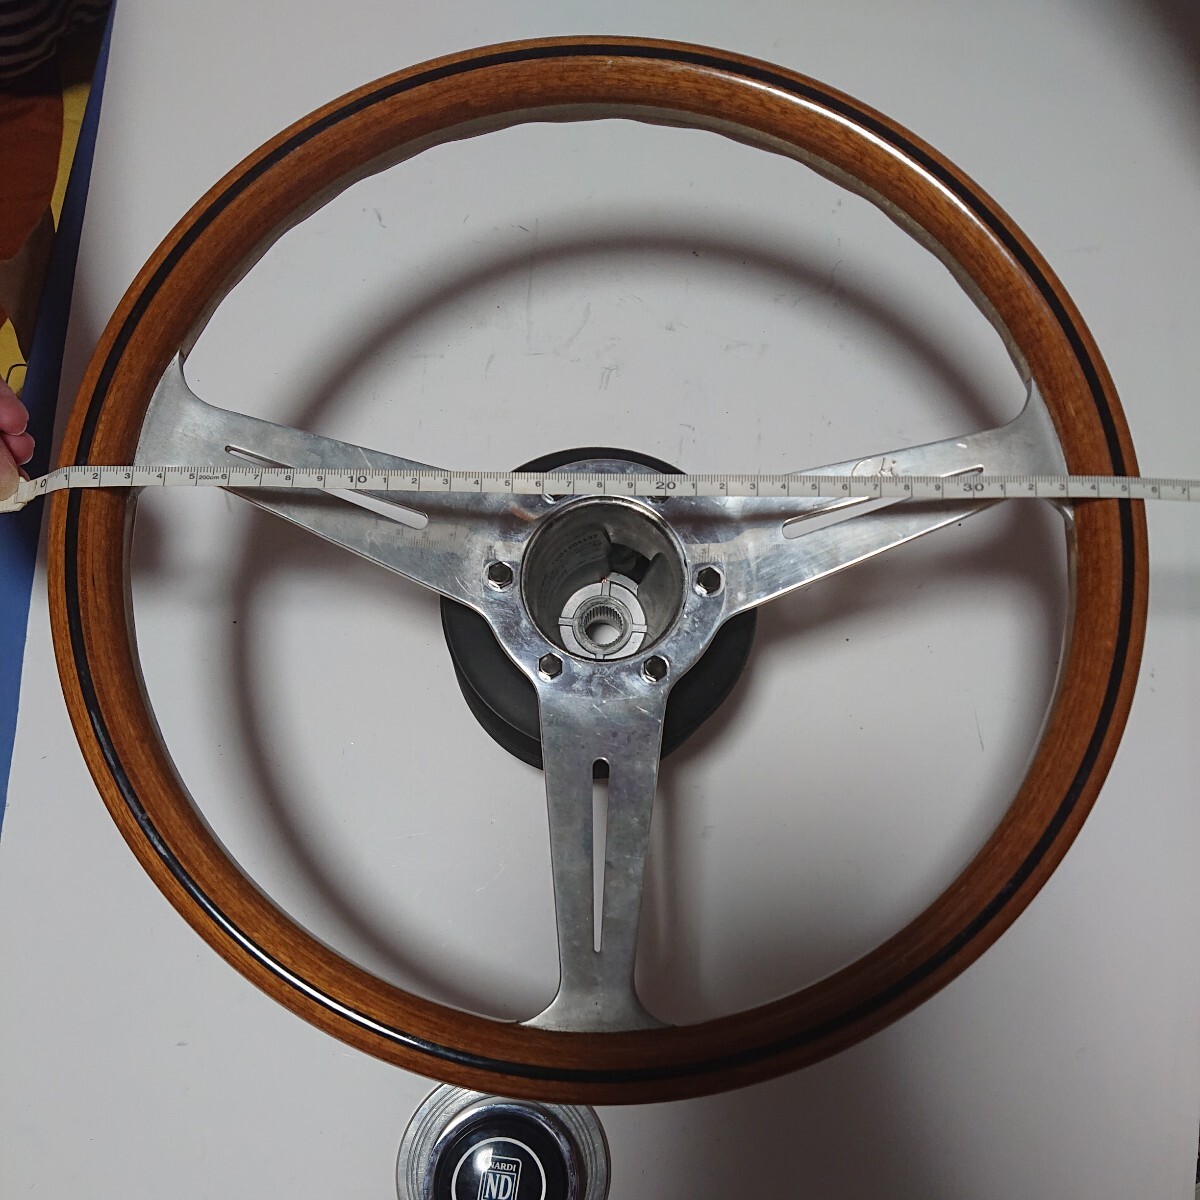  Nardi Classic wooden steering wheel NARDI old car TORINO that time thing steering gear wood 36 pie? steering wheel 